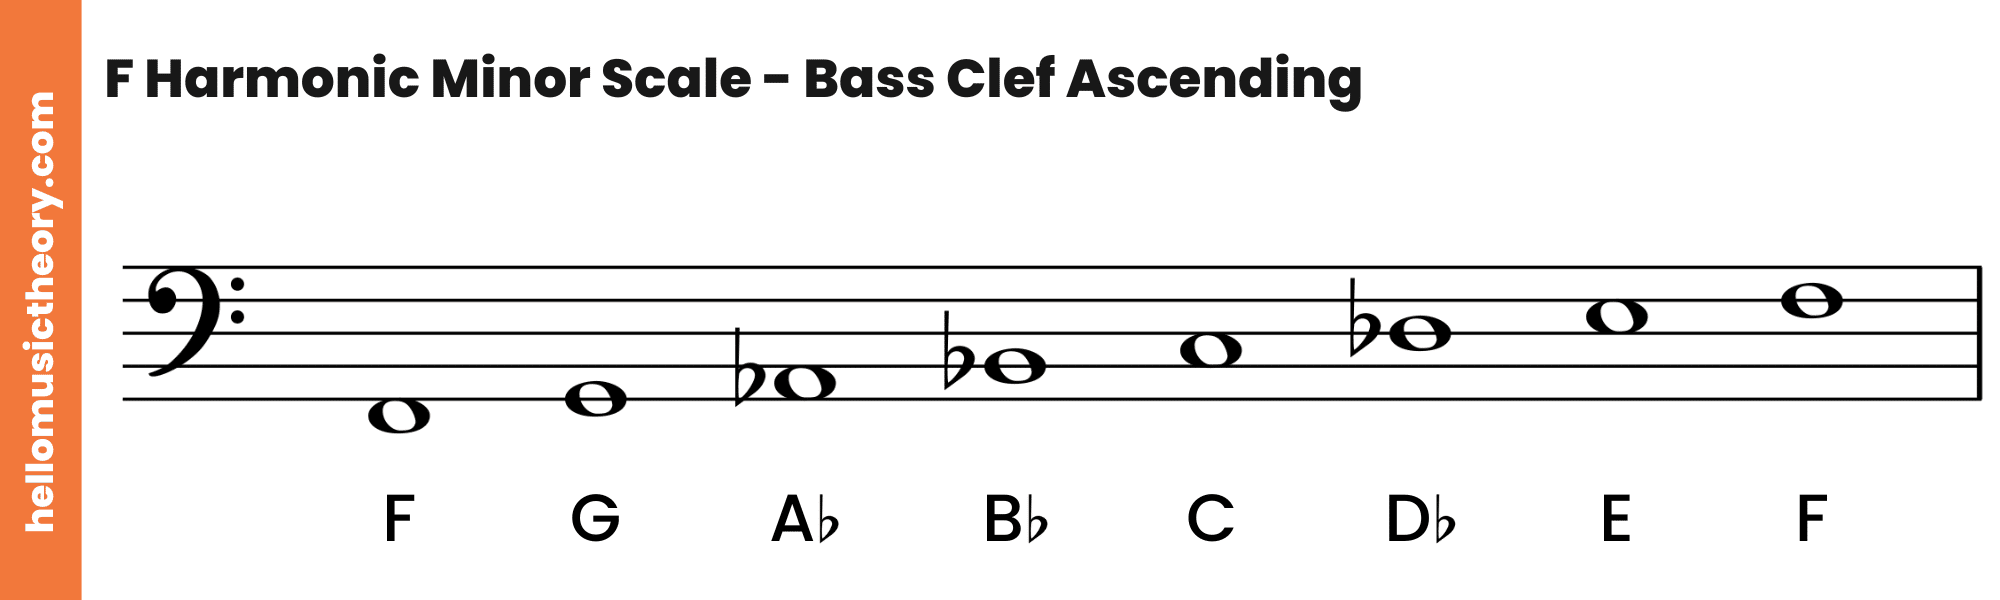 F Harmonic Minor Scale Bass Clef Ascending